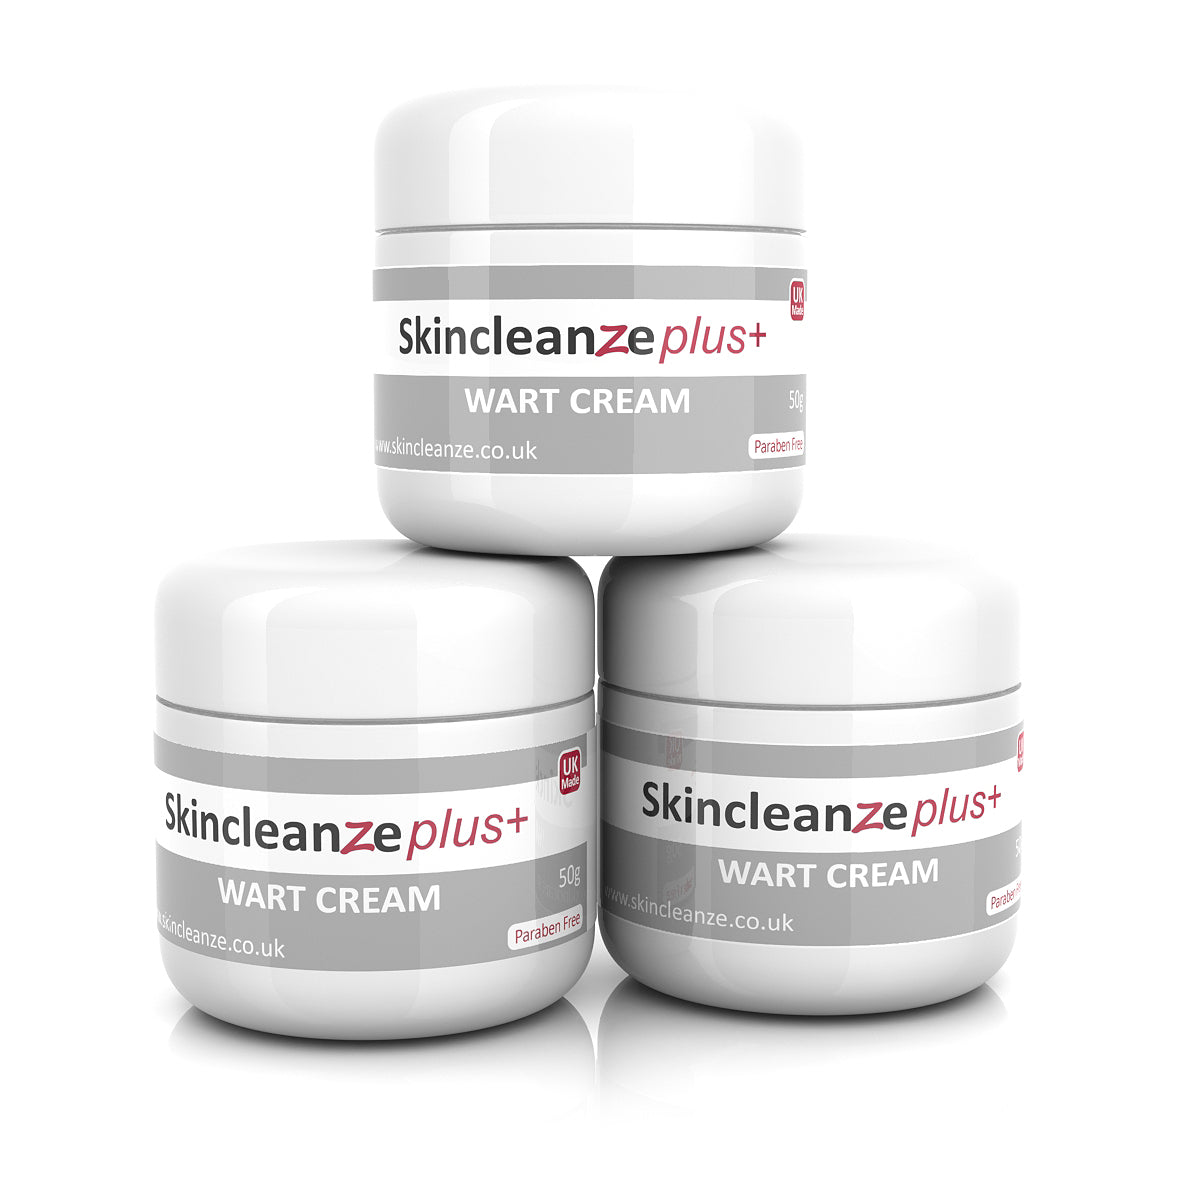 Skincleanze plus+ Wart & Verruca Cream Double Strength (Pack of 3x 50g)